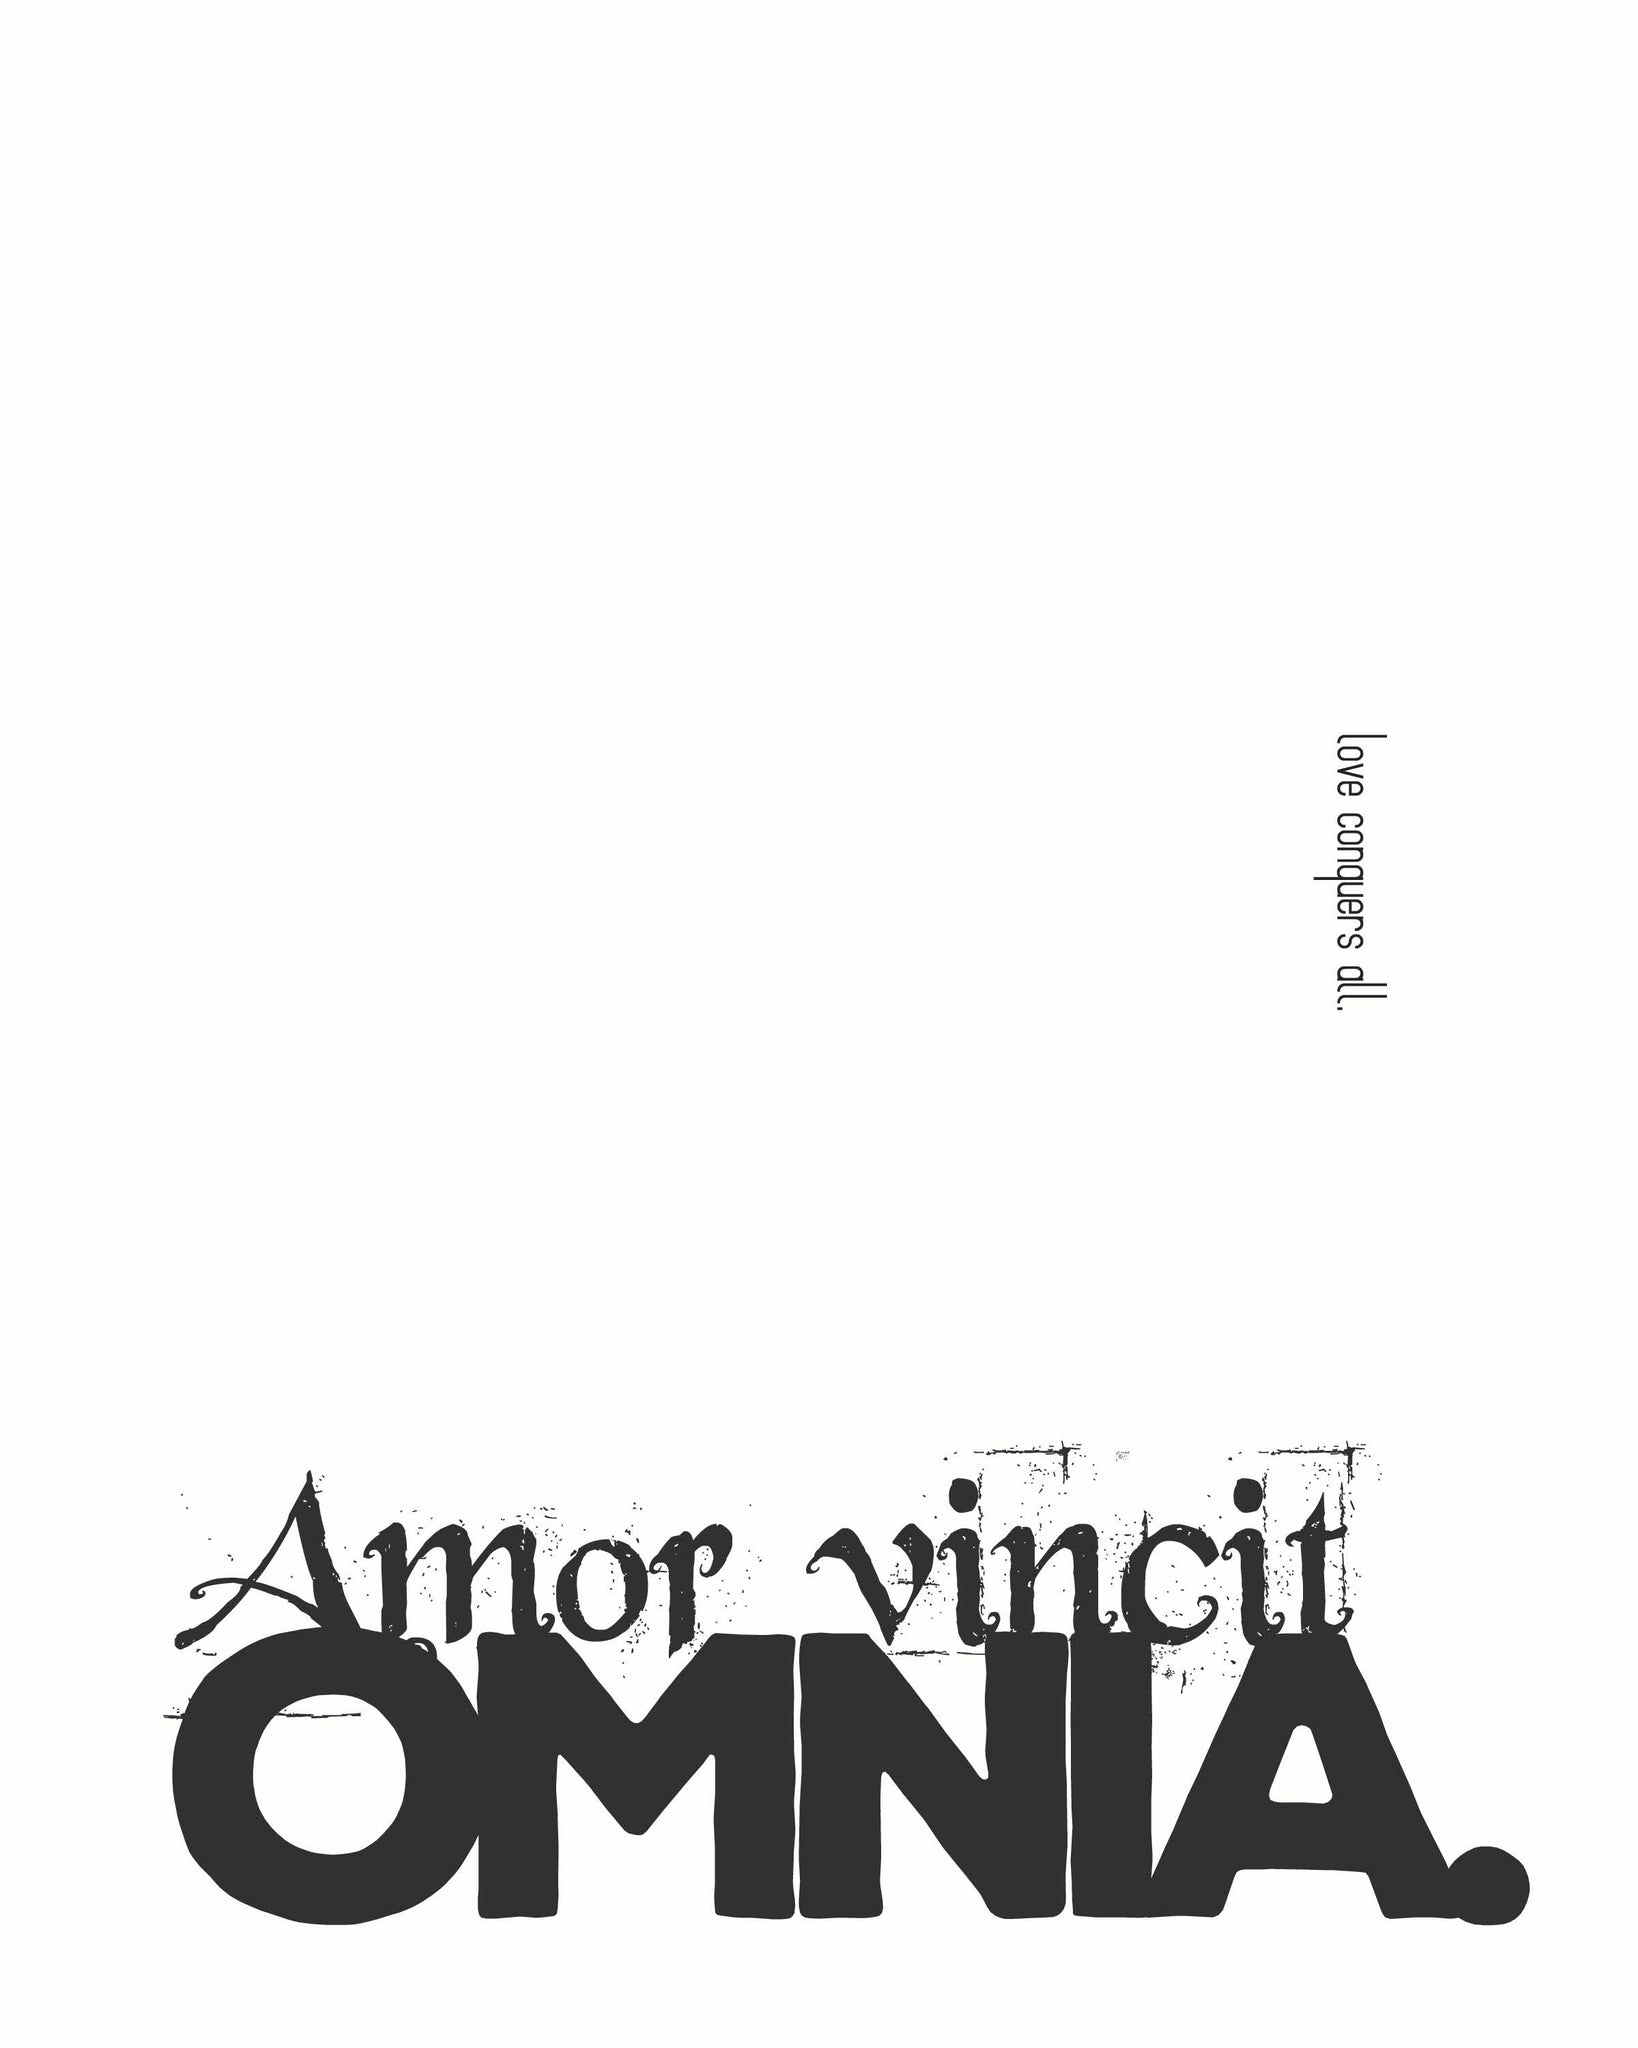 Latin Phrases Poster - Amore Vincit Omnia (Love Conquers All)  **Digital Download**